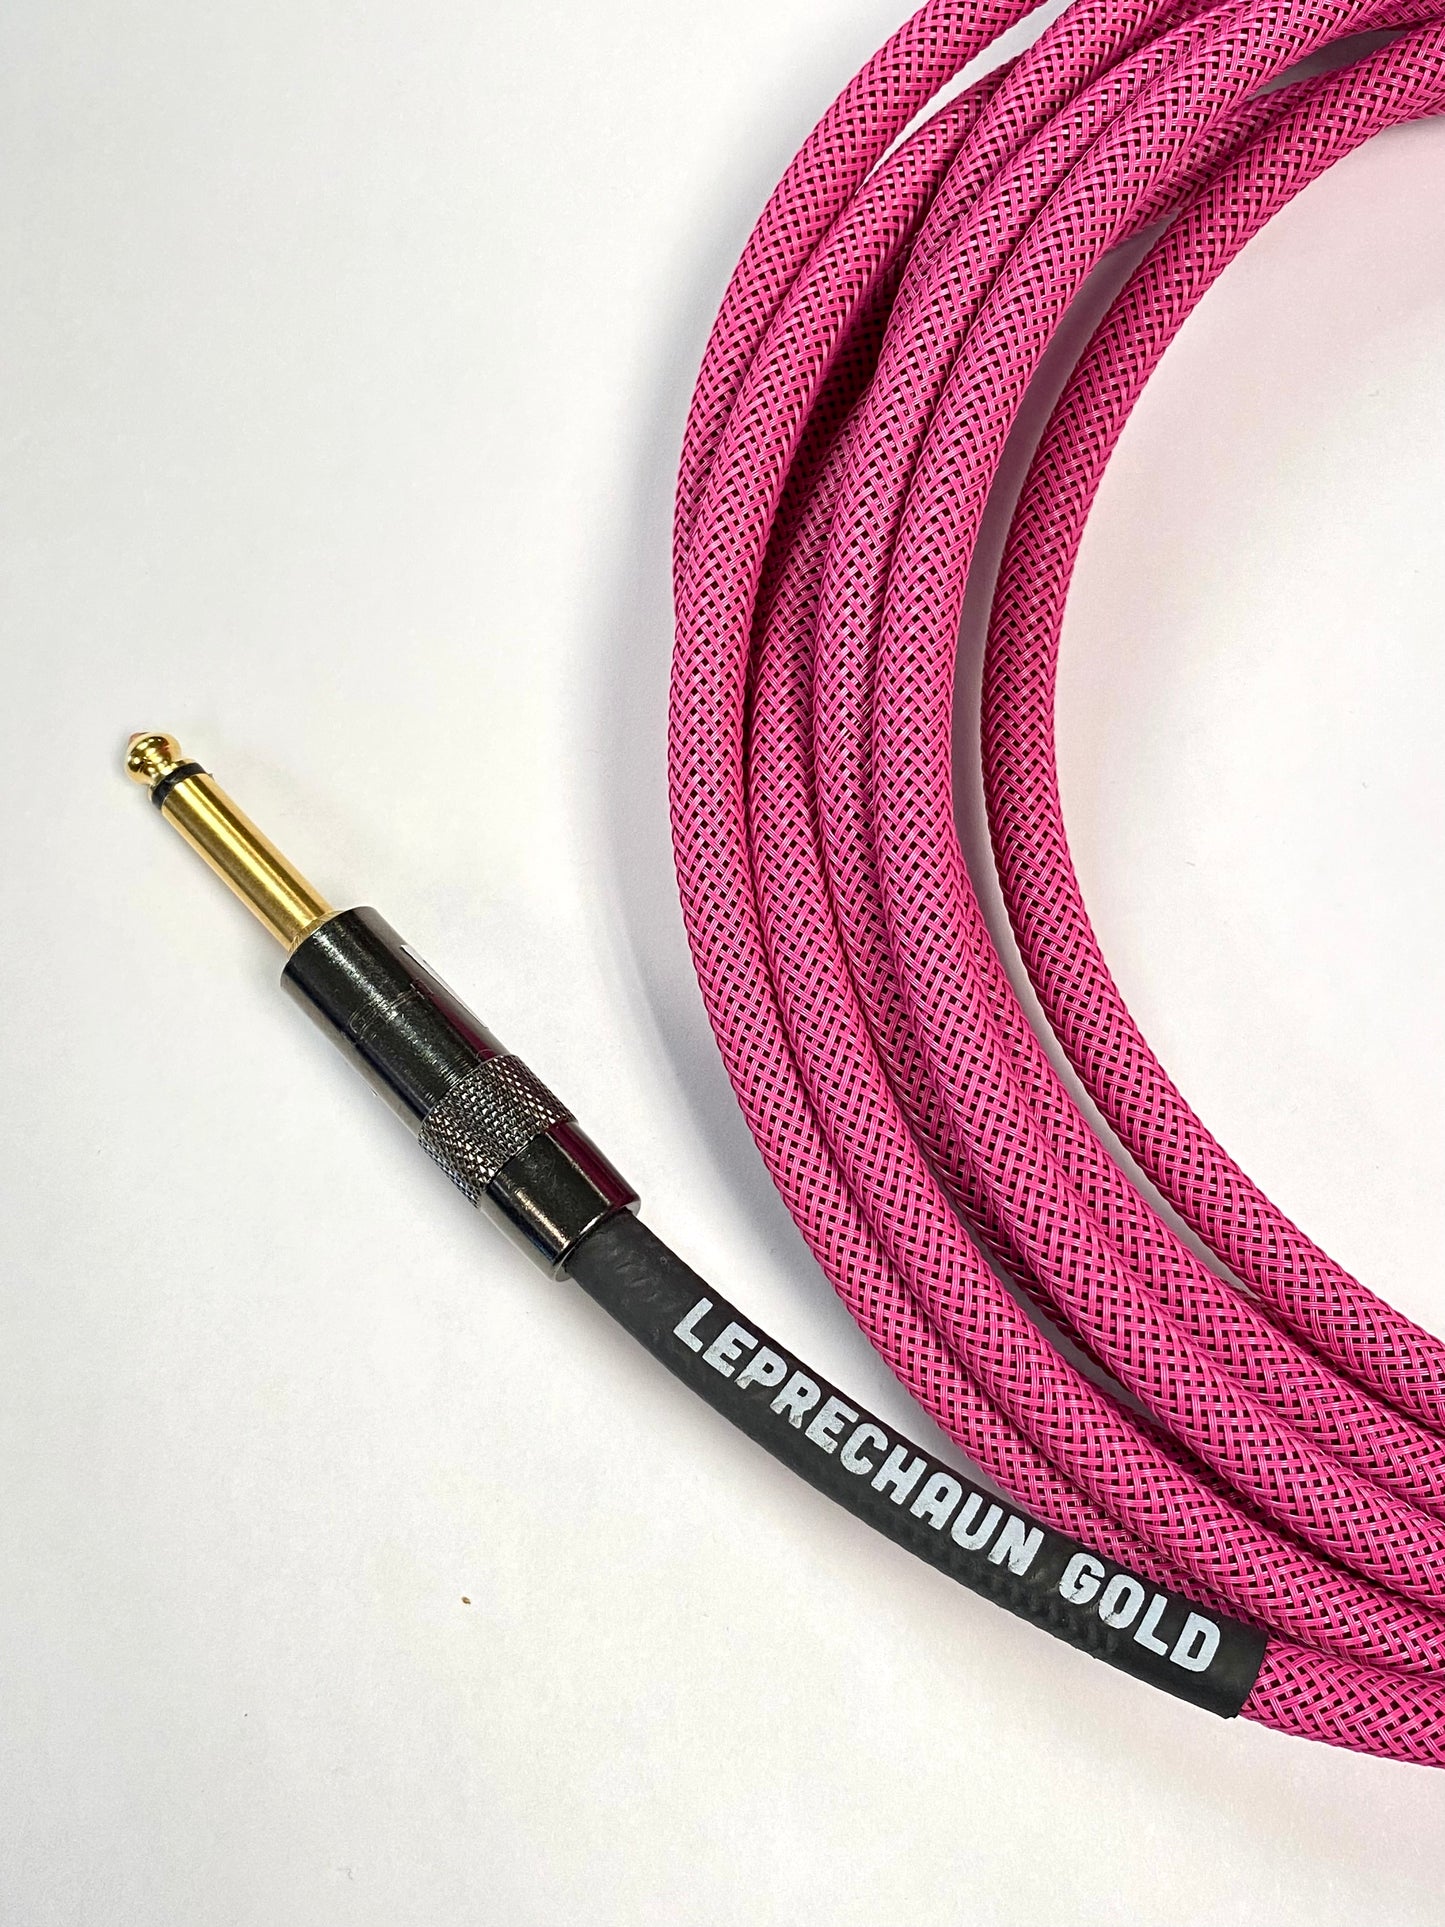 Leprechaun Gold Instrument Cable (Pink)